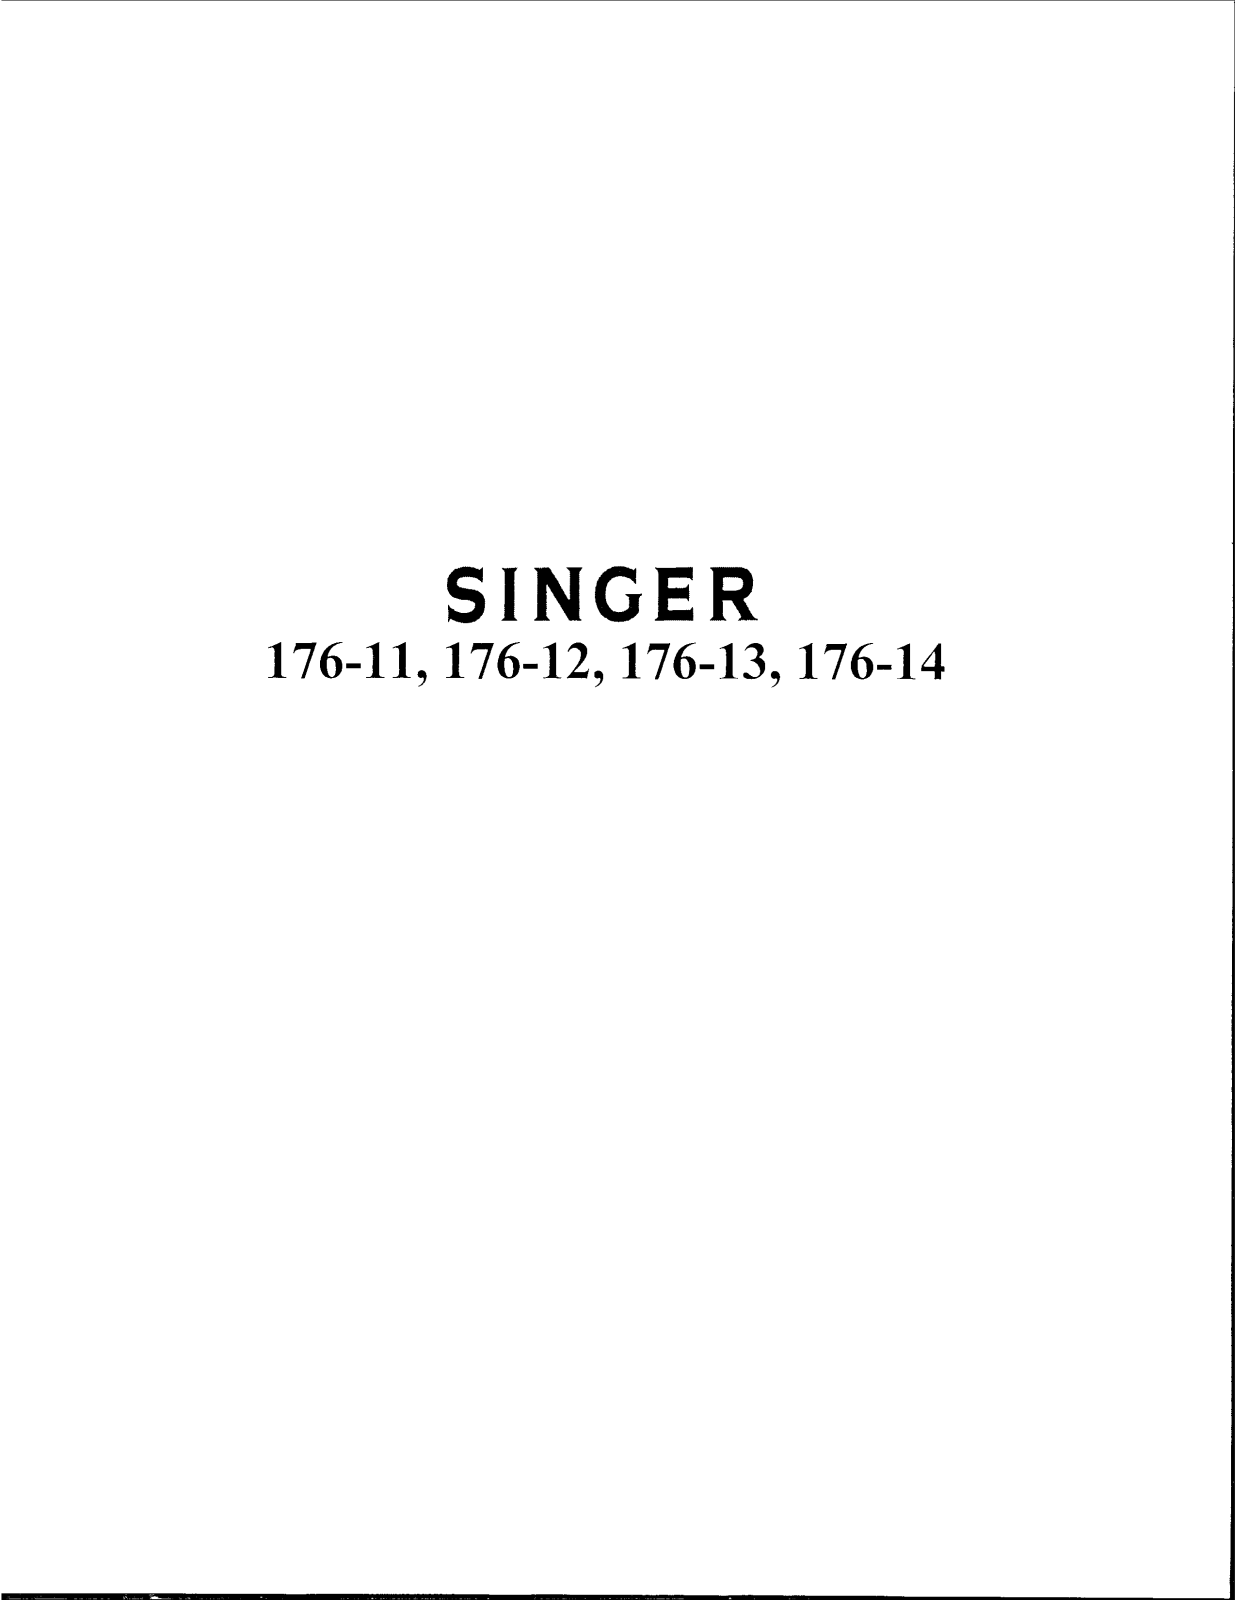 Singer 176-11, 176-14, 176-13, 176-12 Instruction Manual